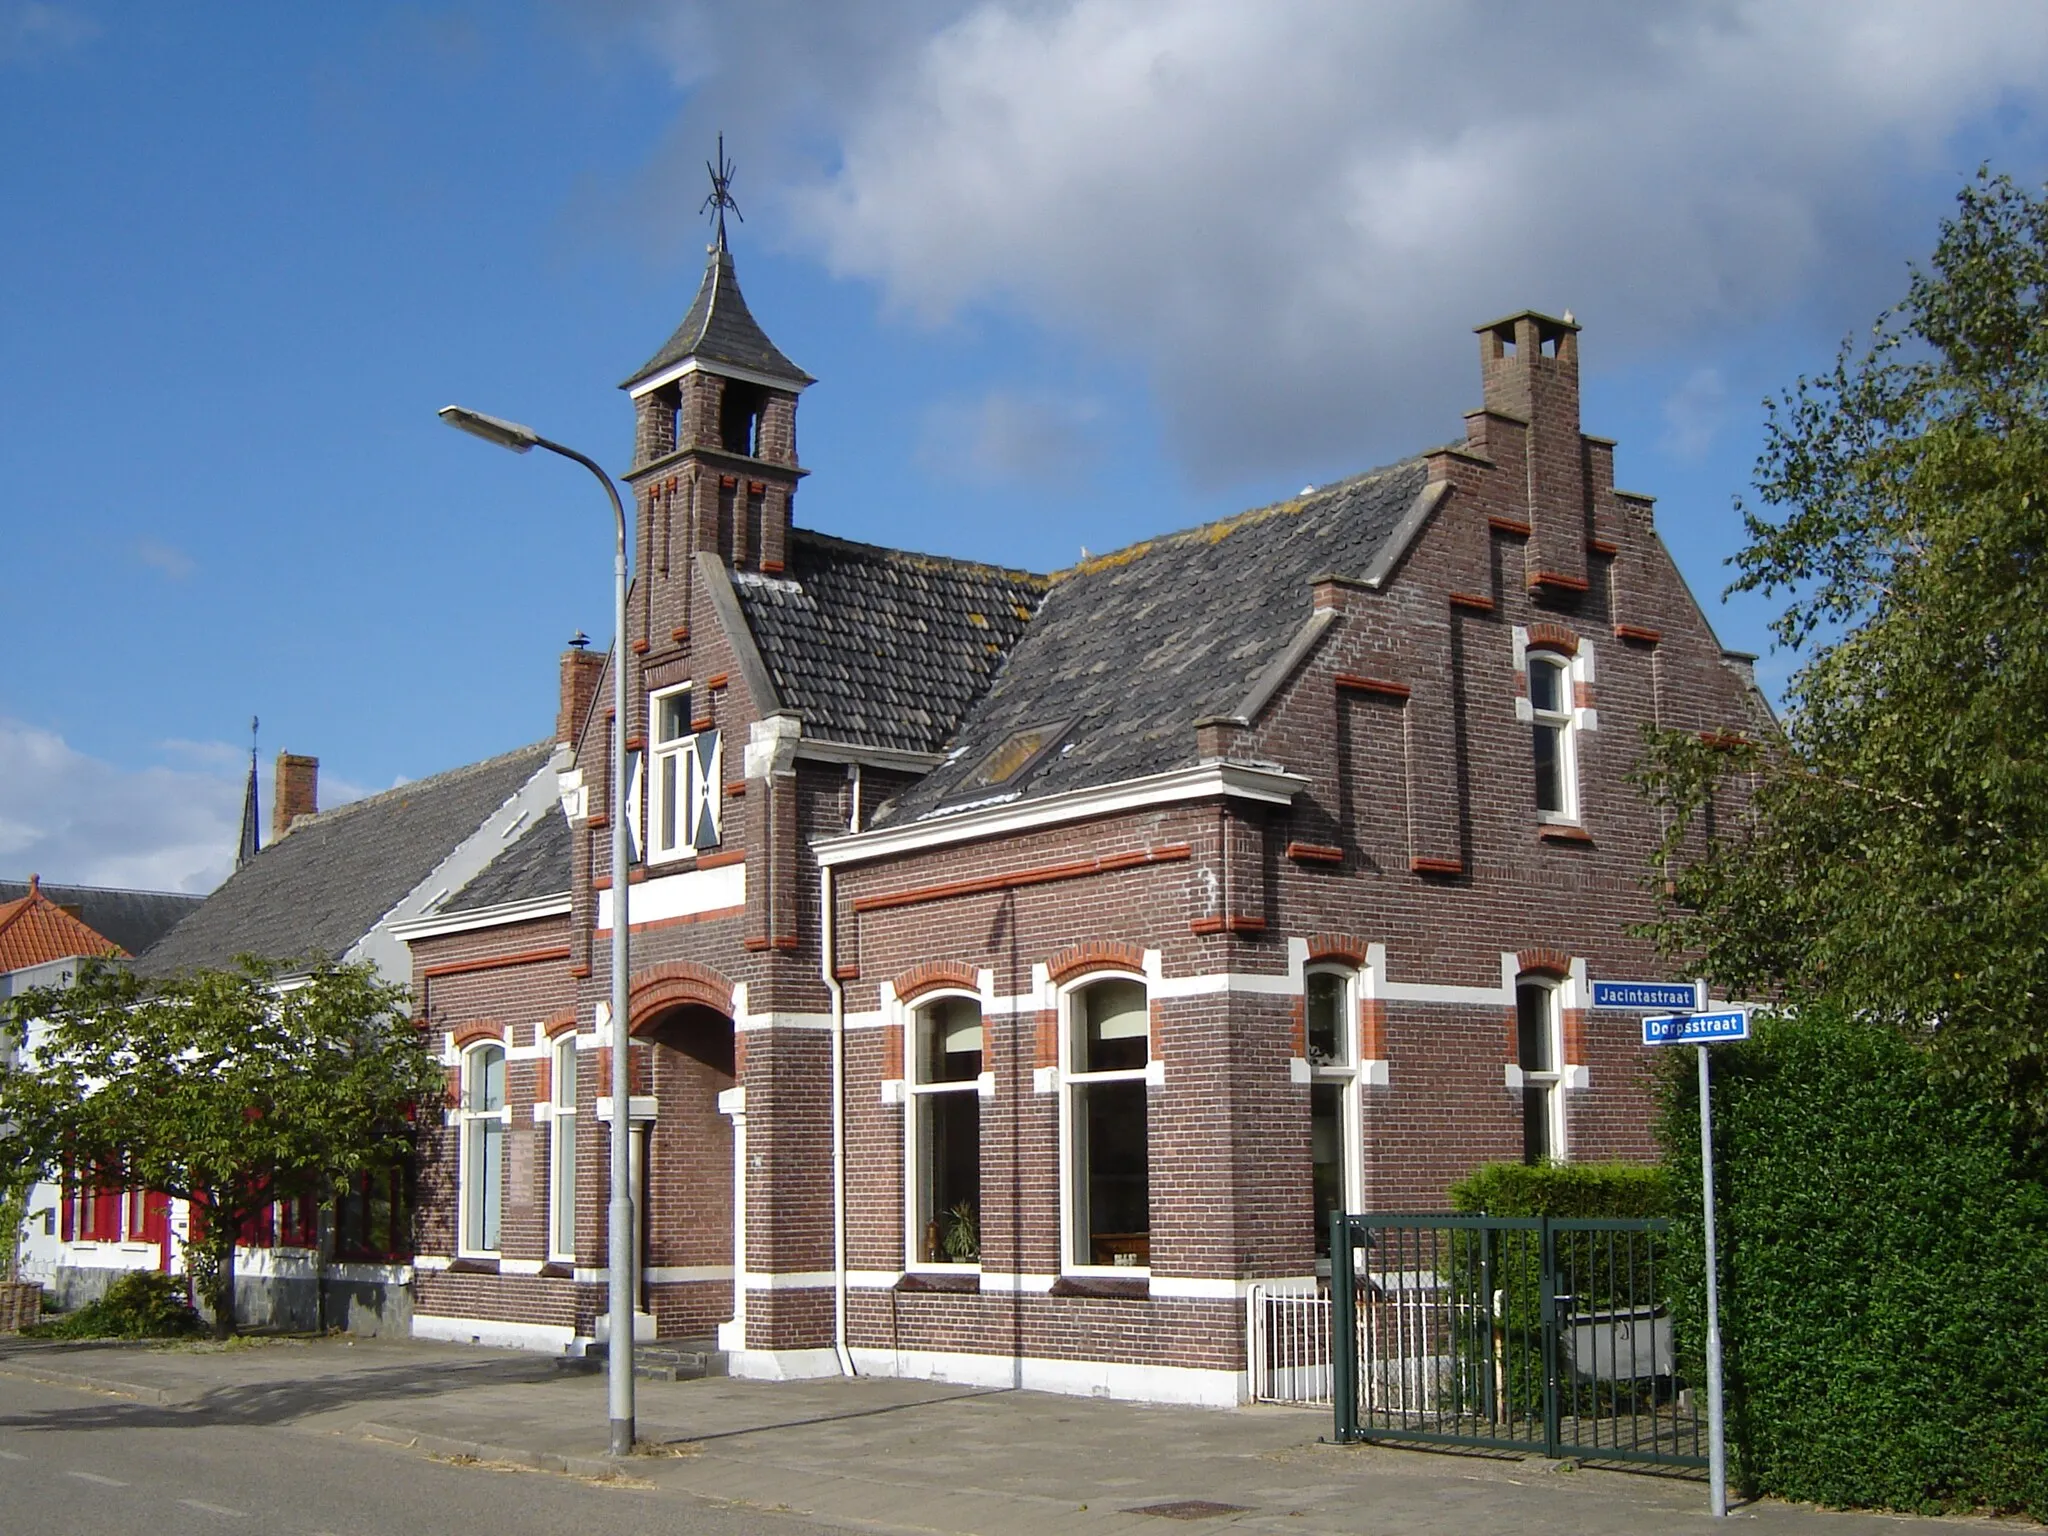 Photo showing: Former town hall of Graauw. Graauw, Hulst, Zeeland, the Netherlands